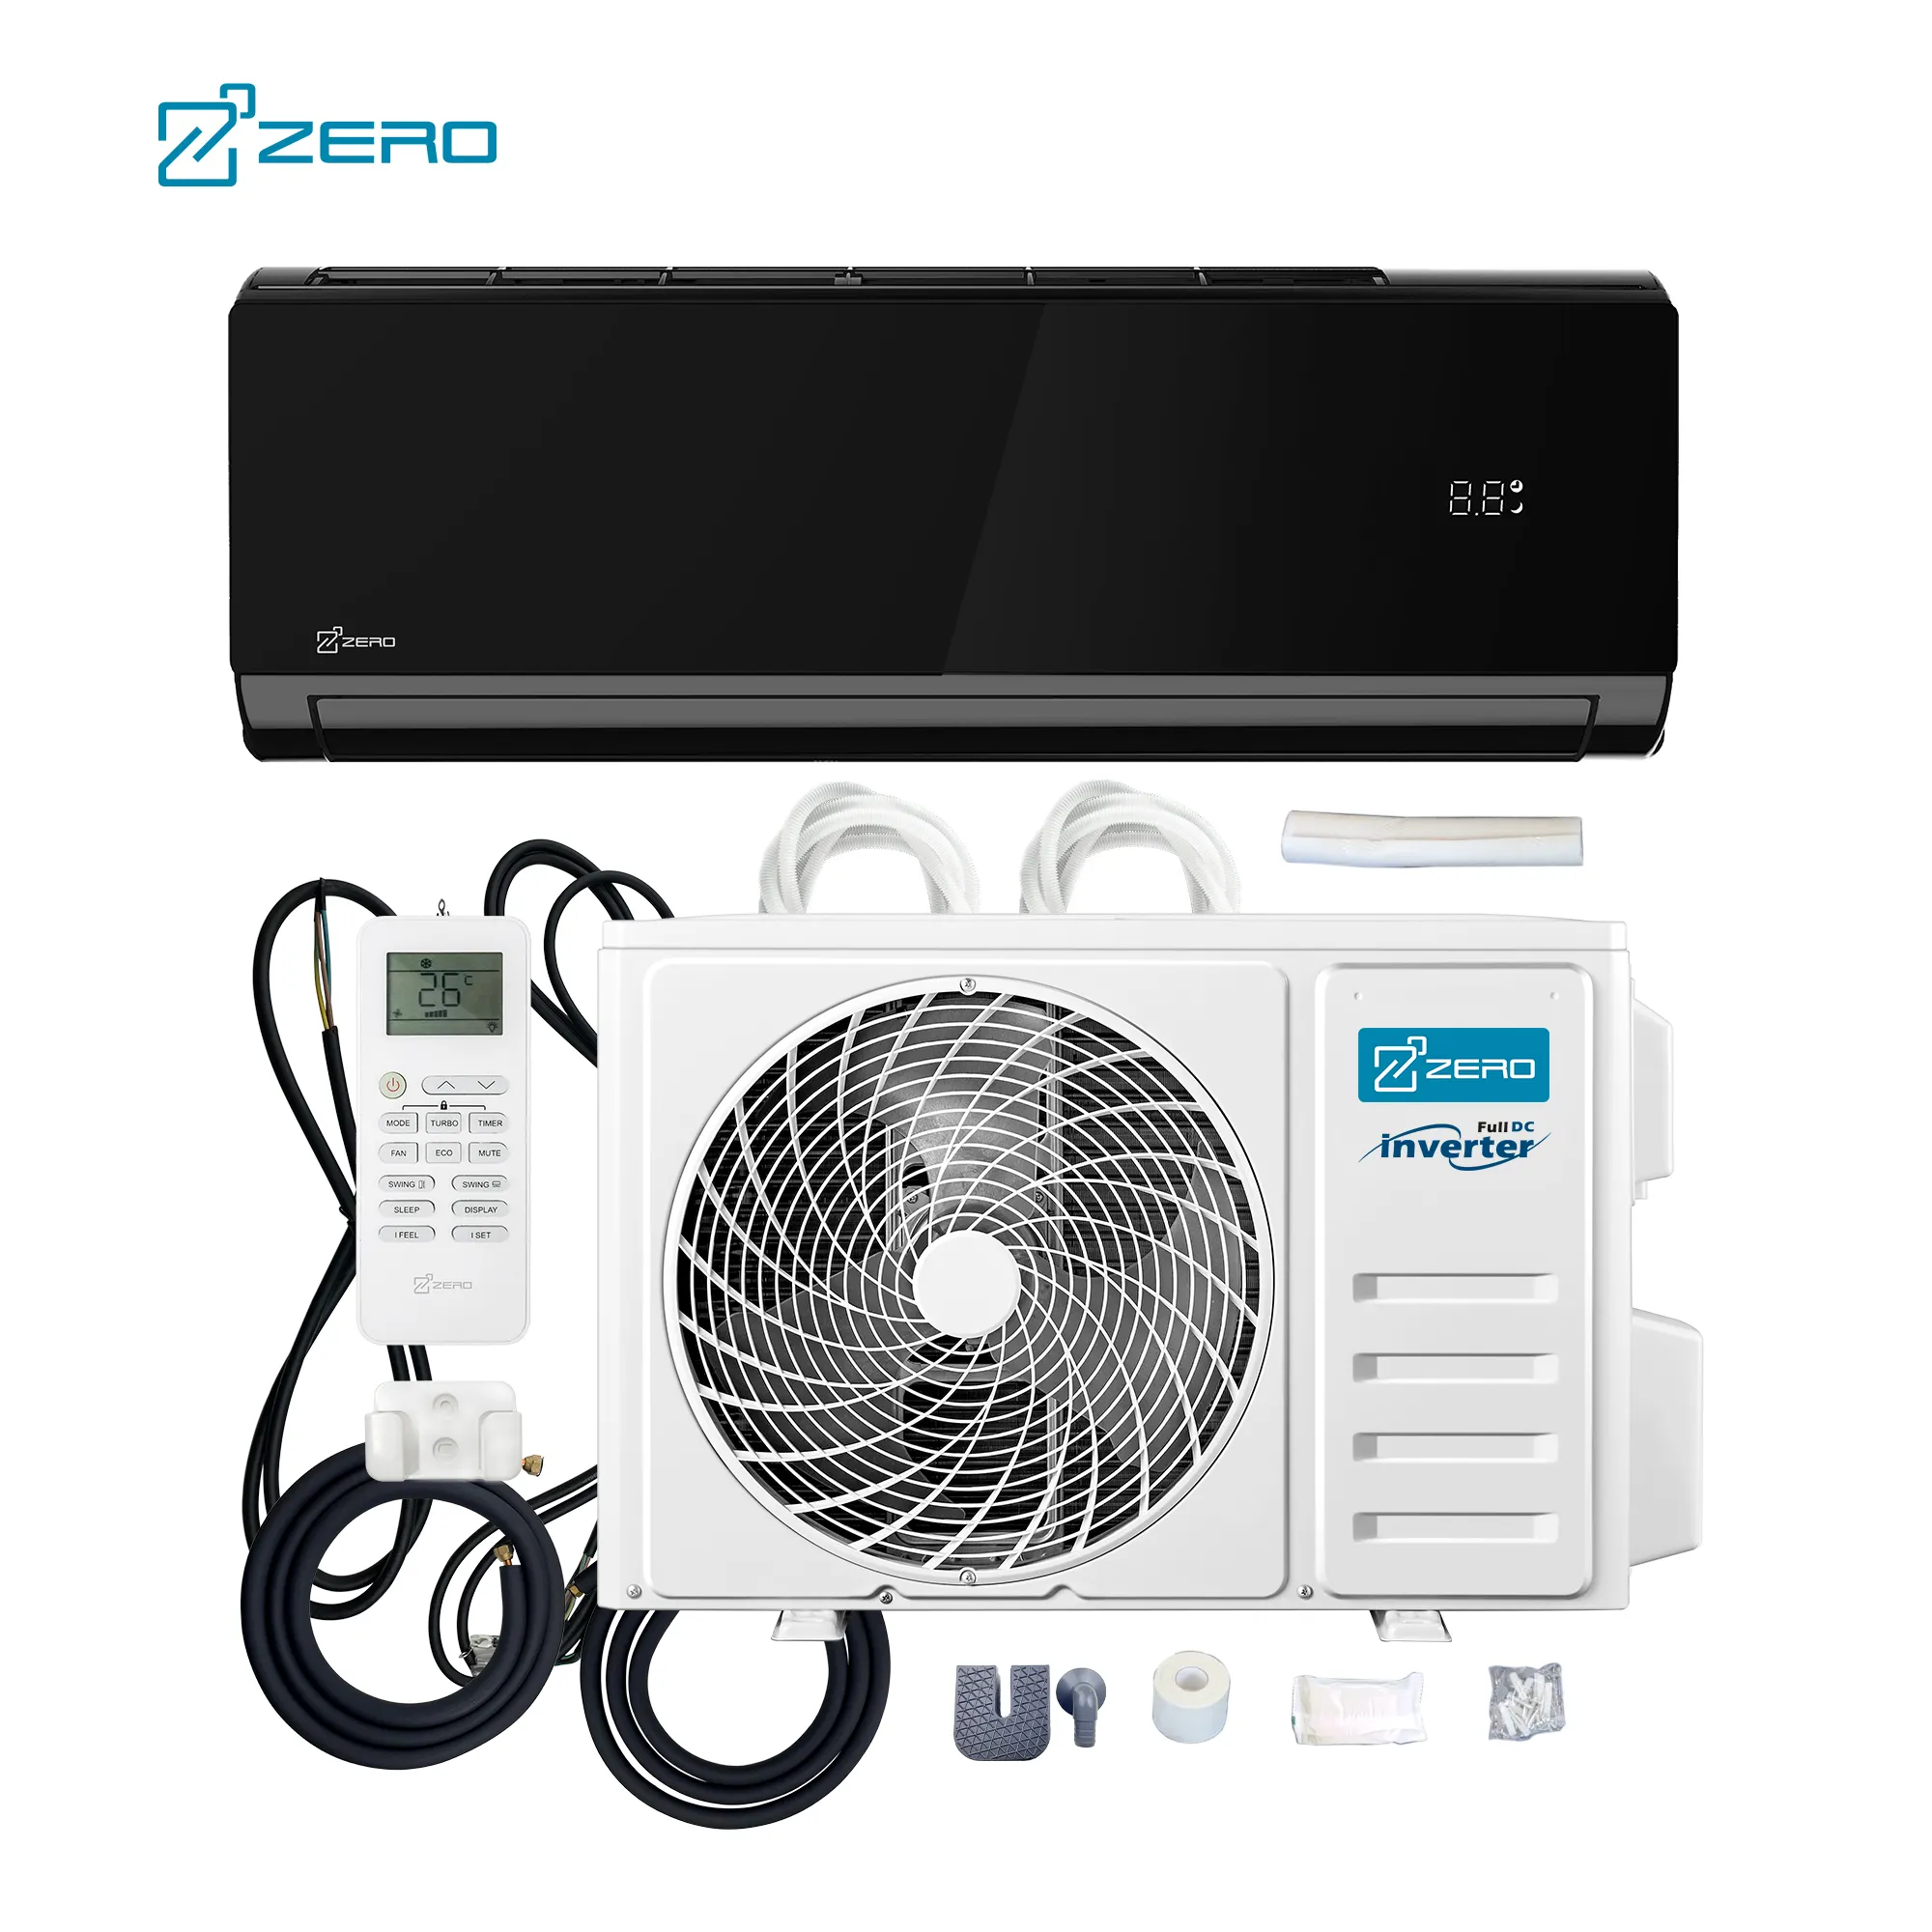 ZERO Z-cool Smart inverter a prueba de óxido Btu mini split aire acondicionado 7000 - 24000 aire acondicionado tipo split acondicionadores de aire